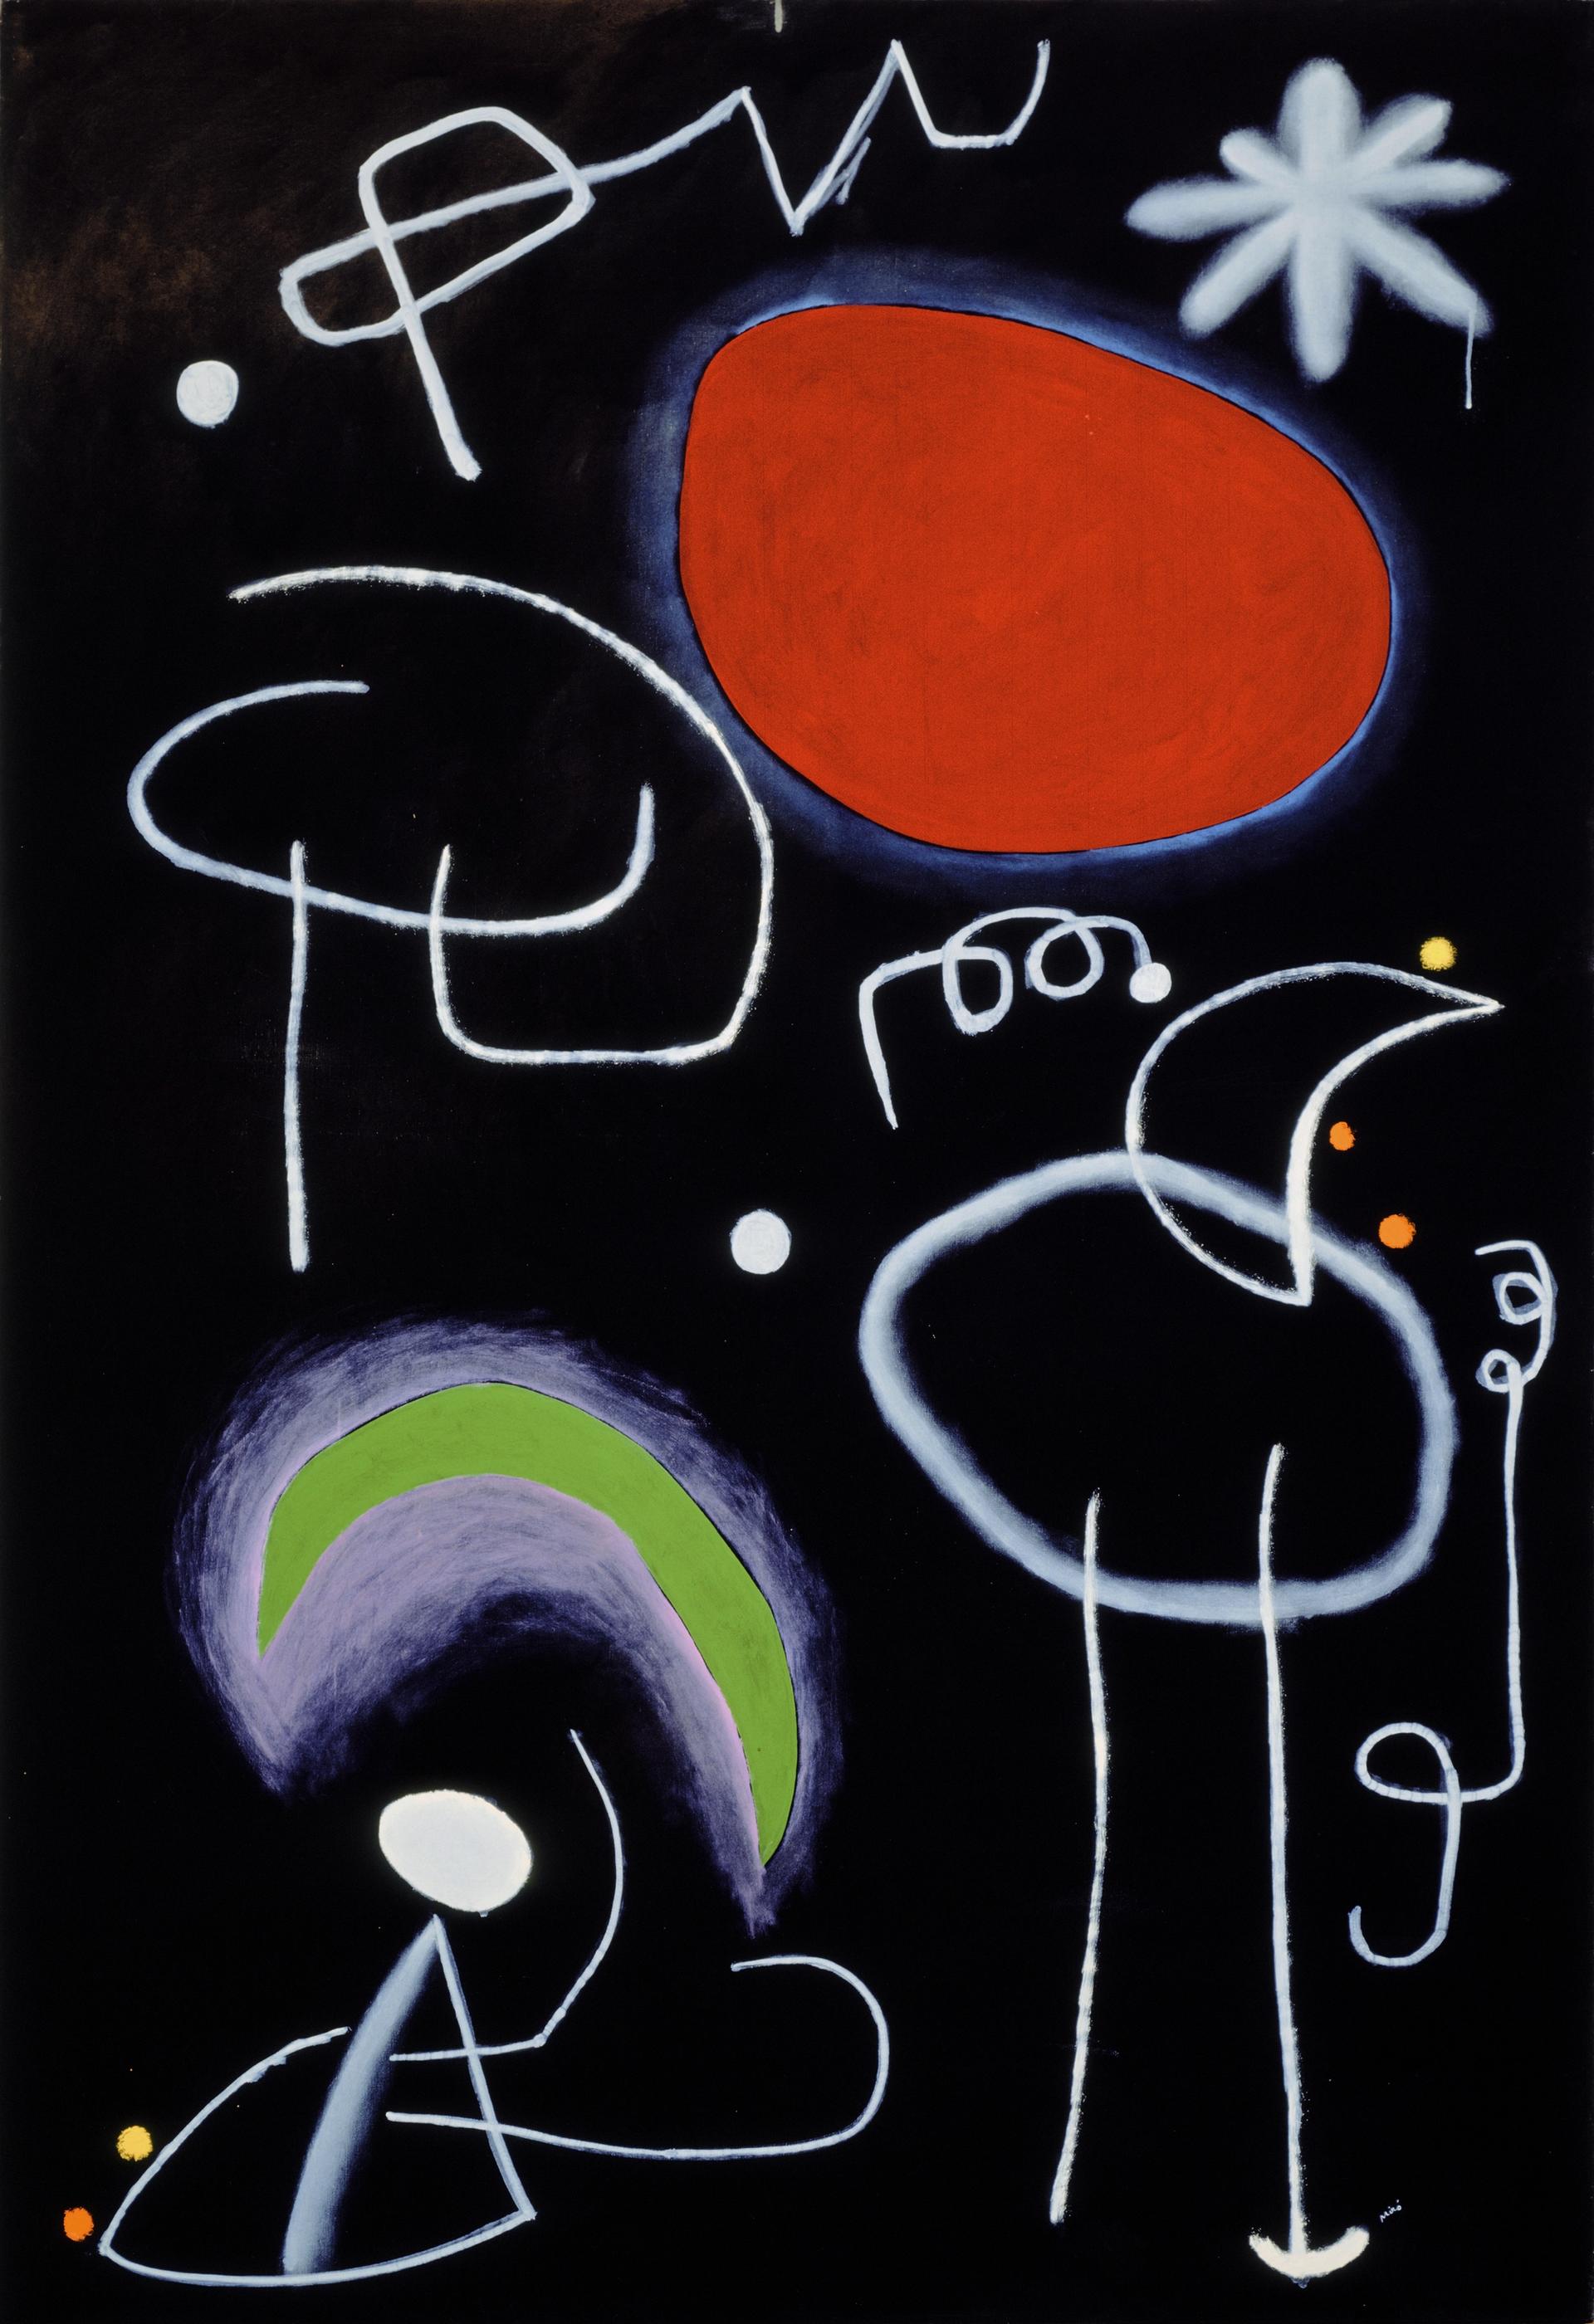 Joan Miró, Painting (1953). © Successió Miró / Artists Rights Society (ARS), New York / ADAGP, Paris 2021. Photo: Dave Ulmer. 